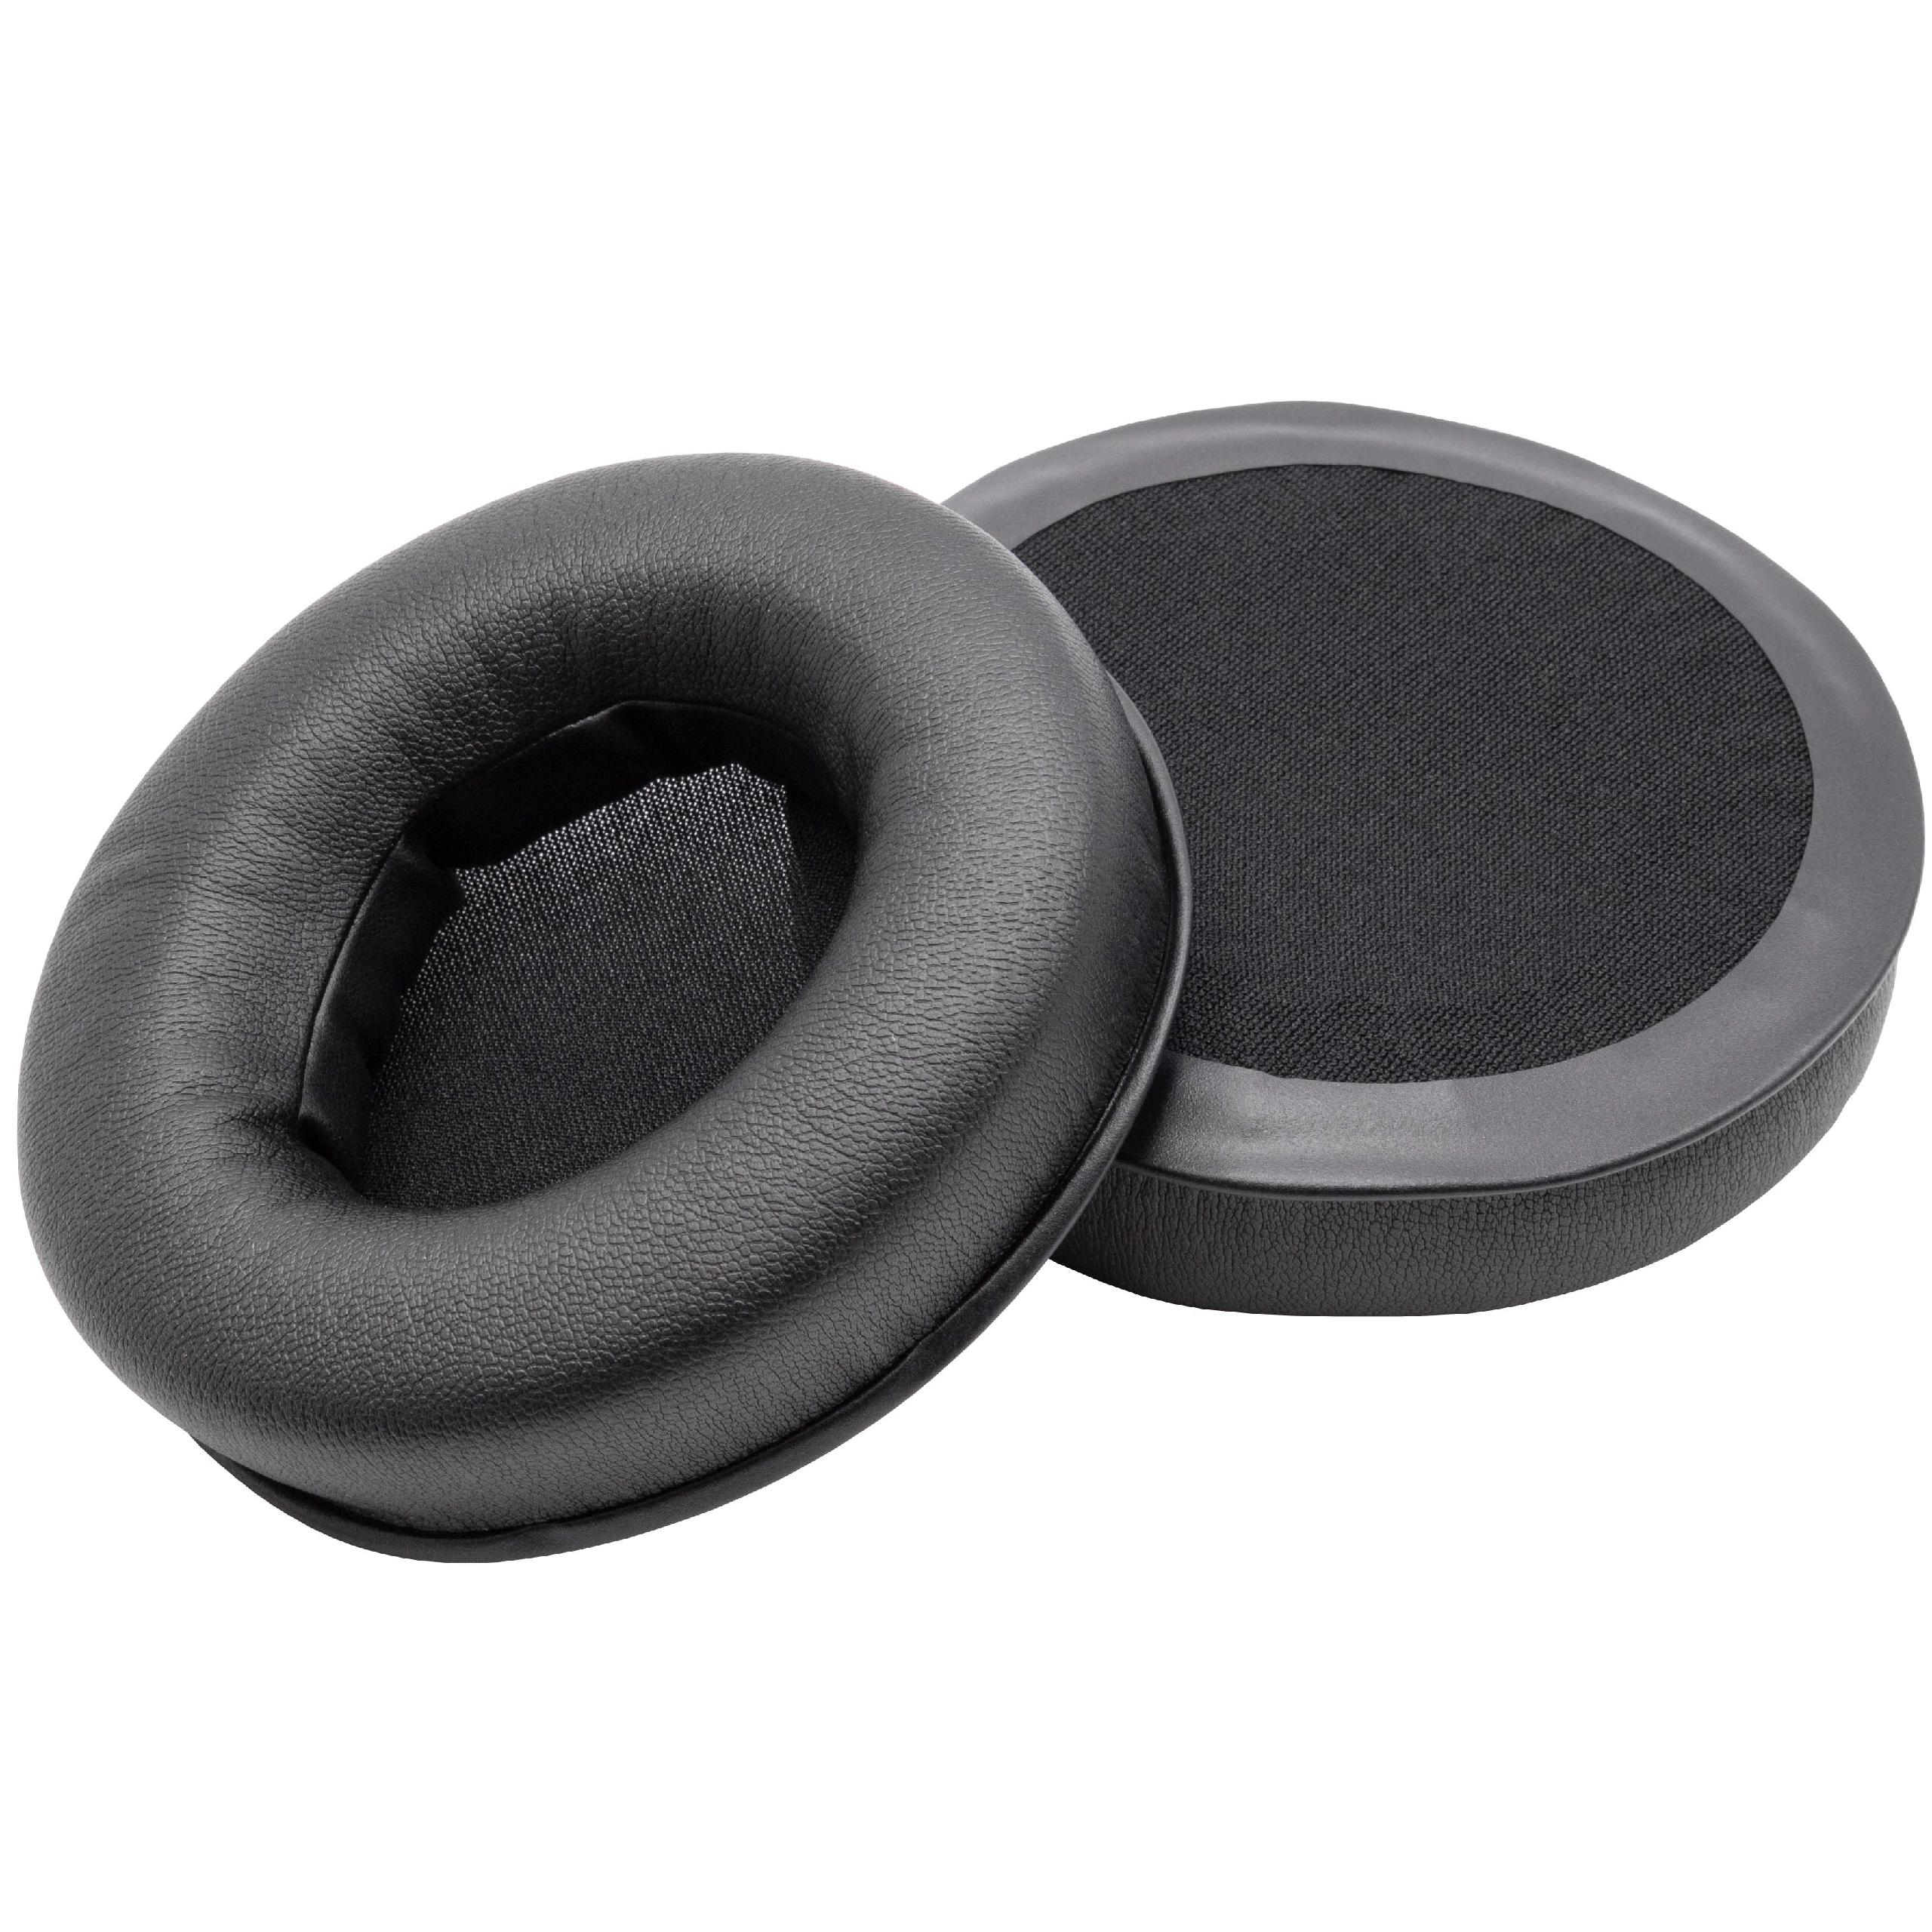 1 paio di cuscinetti per Razer Kraken cuffie ecc. - poliuretano / gommapiuma, 8,7 cm diametro esterno, 20 mm s